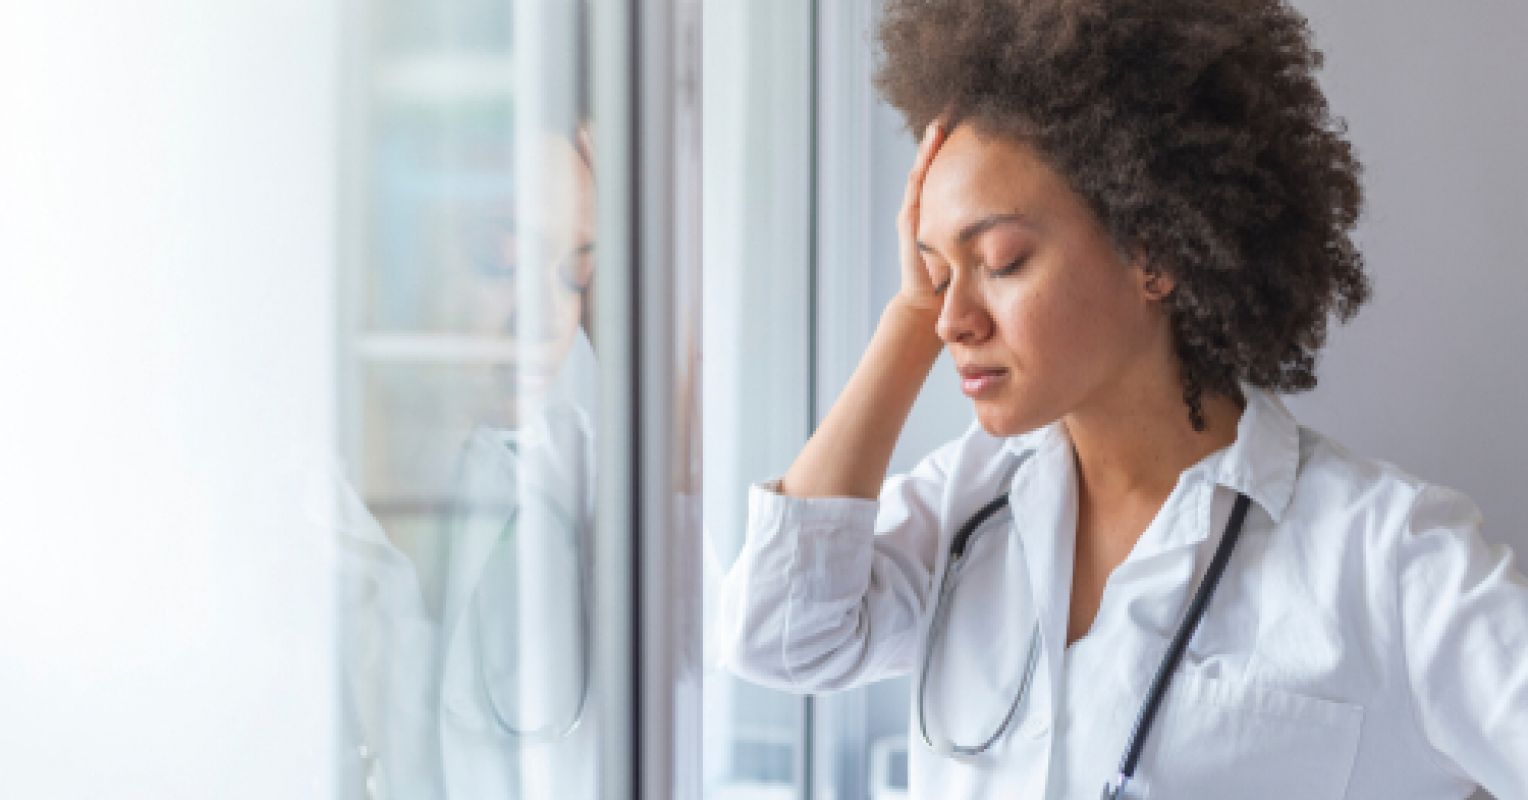 Healthcare Worker Burnout Is Undermining Patient Care